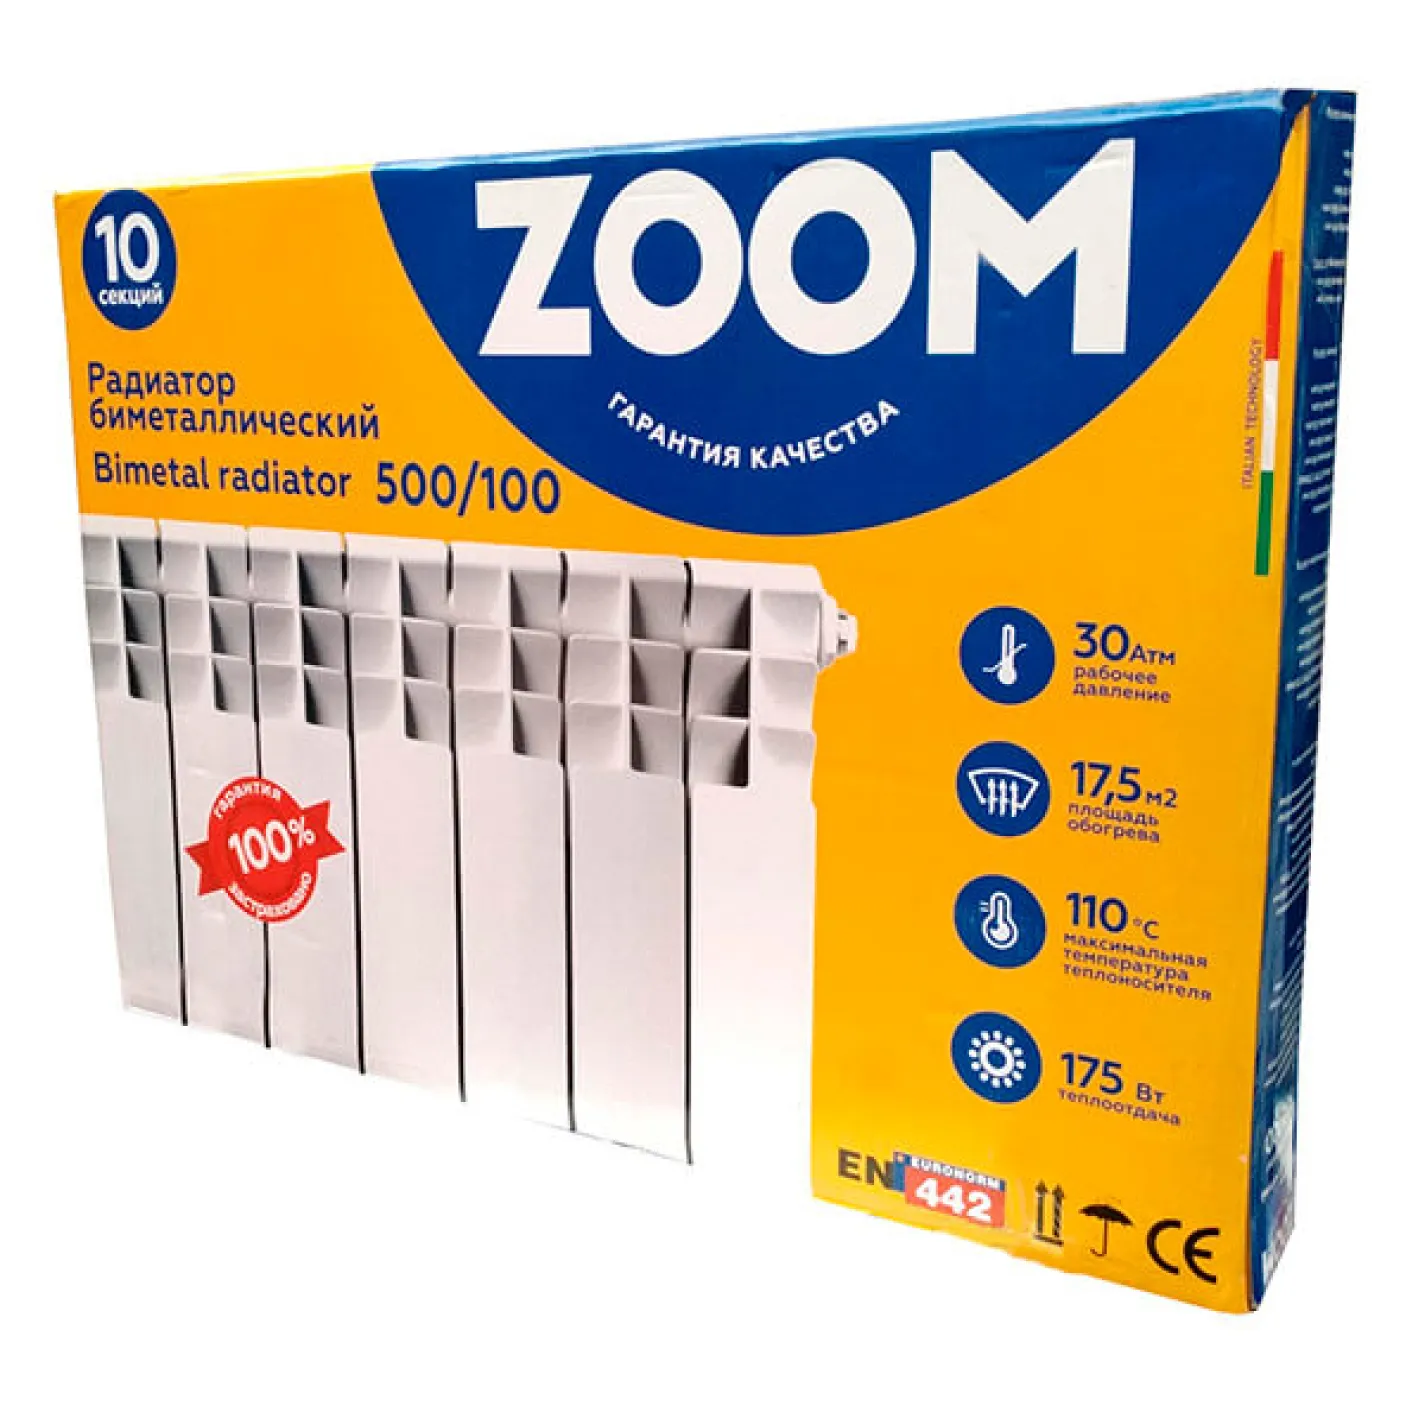 Биметаллический радиатор Zoom 500/100 - Фото 1